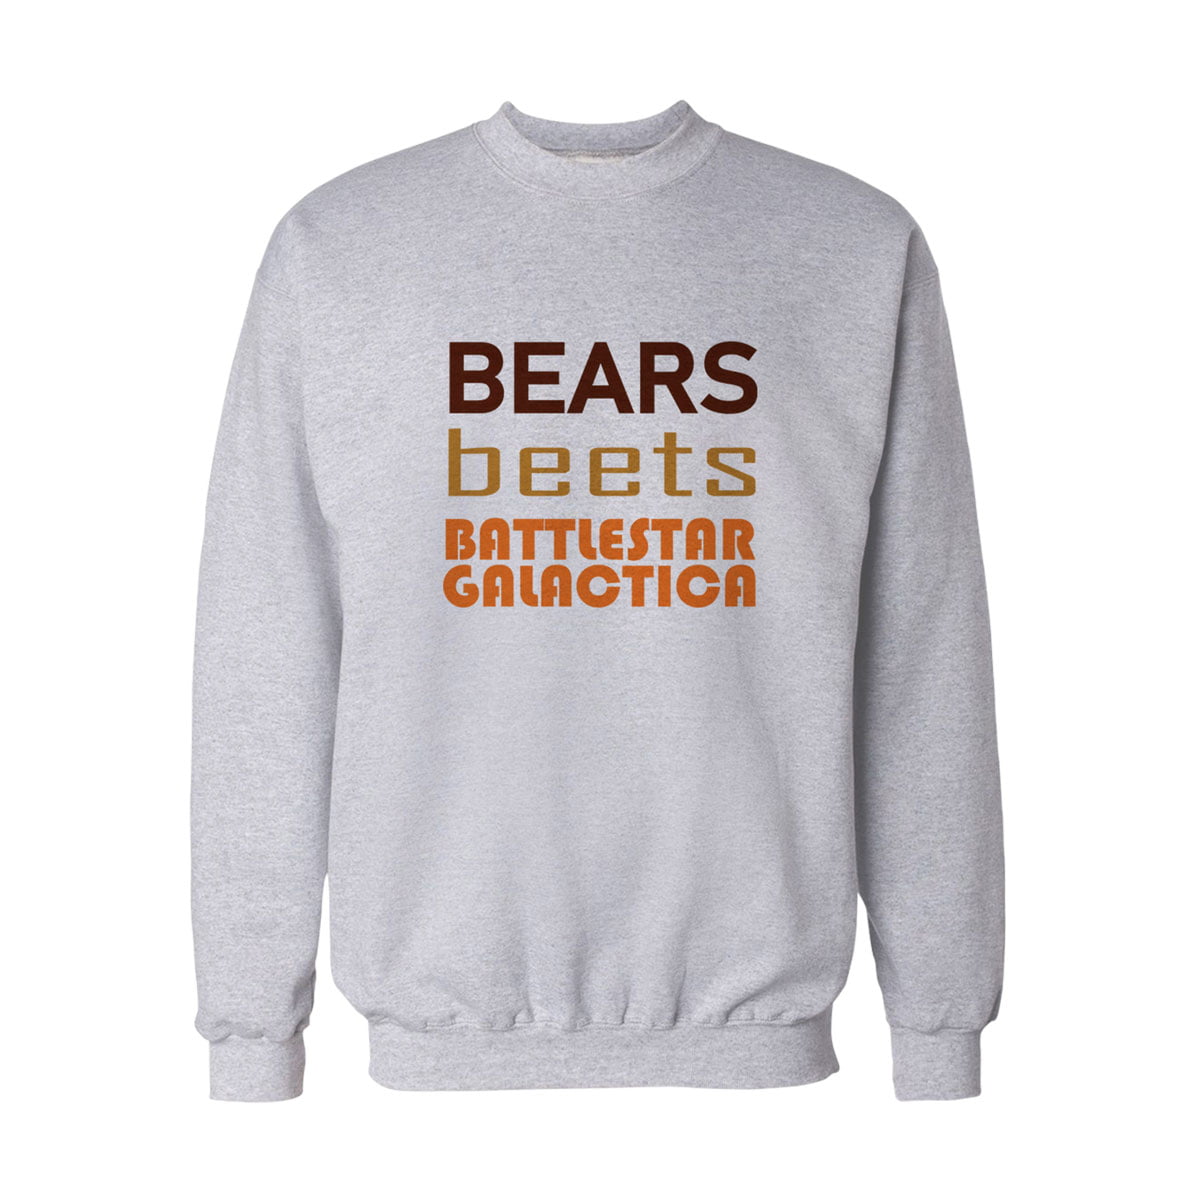 The office bears beets bg swwatshirt b - bears beets battlestar galactica unisex sweatshirt - figurex